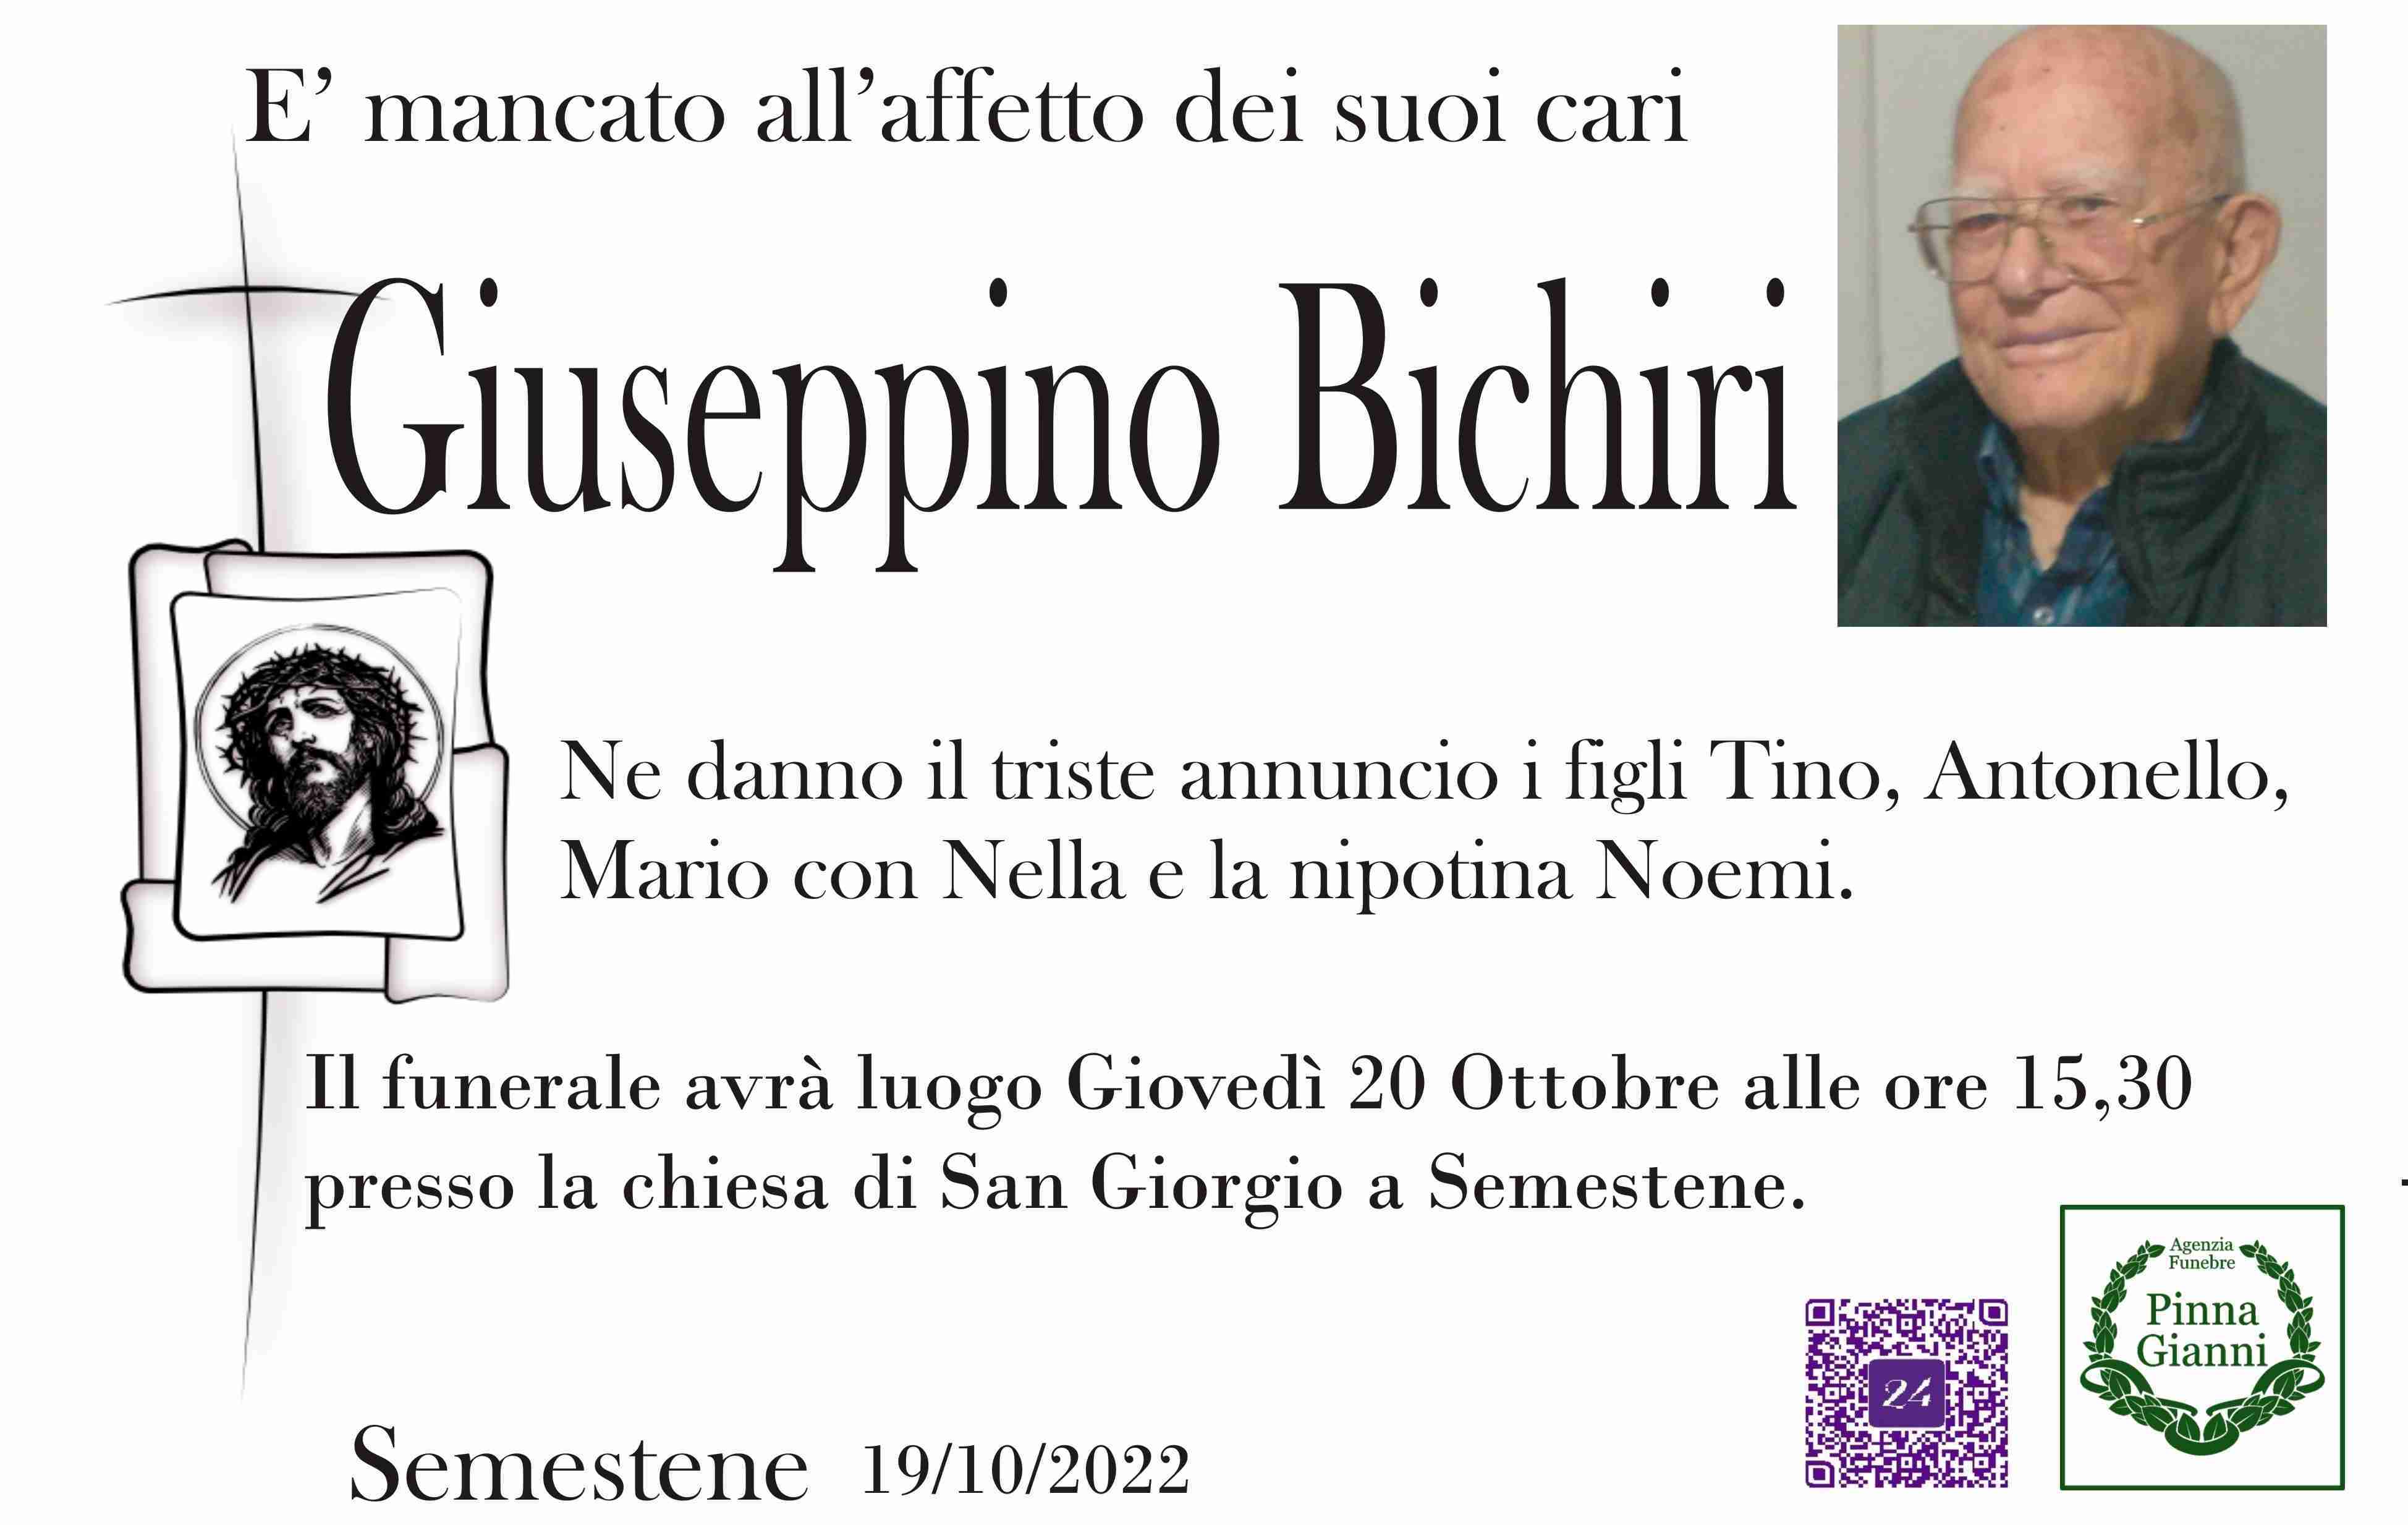 Giuseppino Bichiri